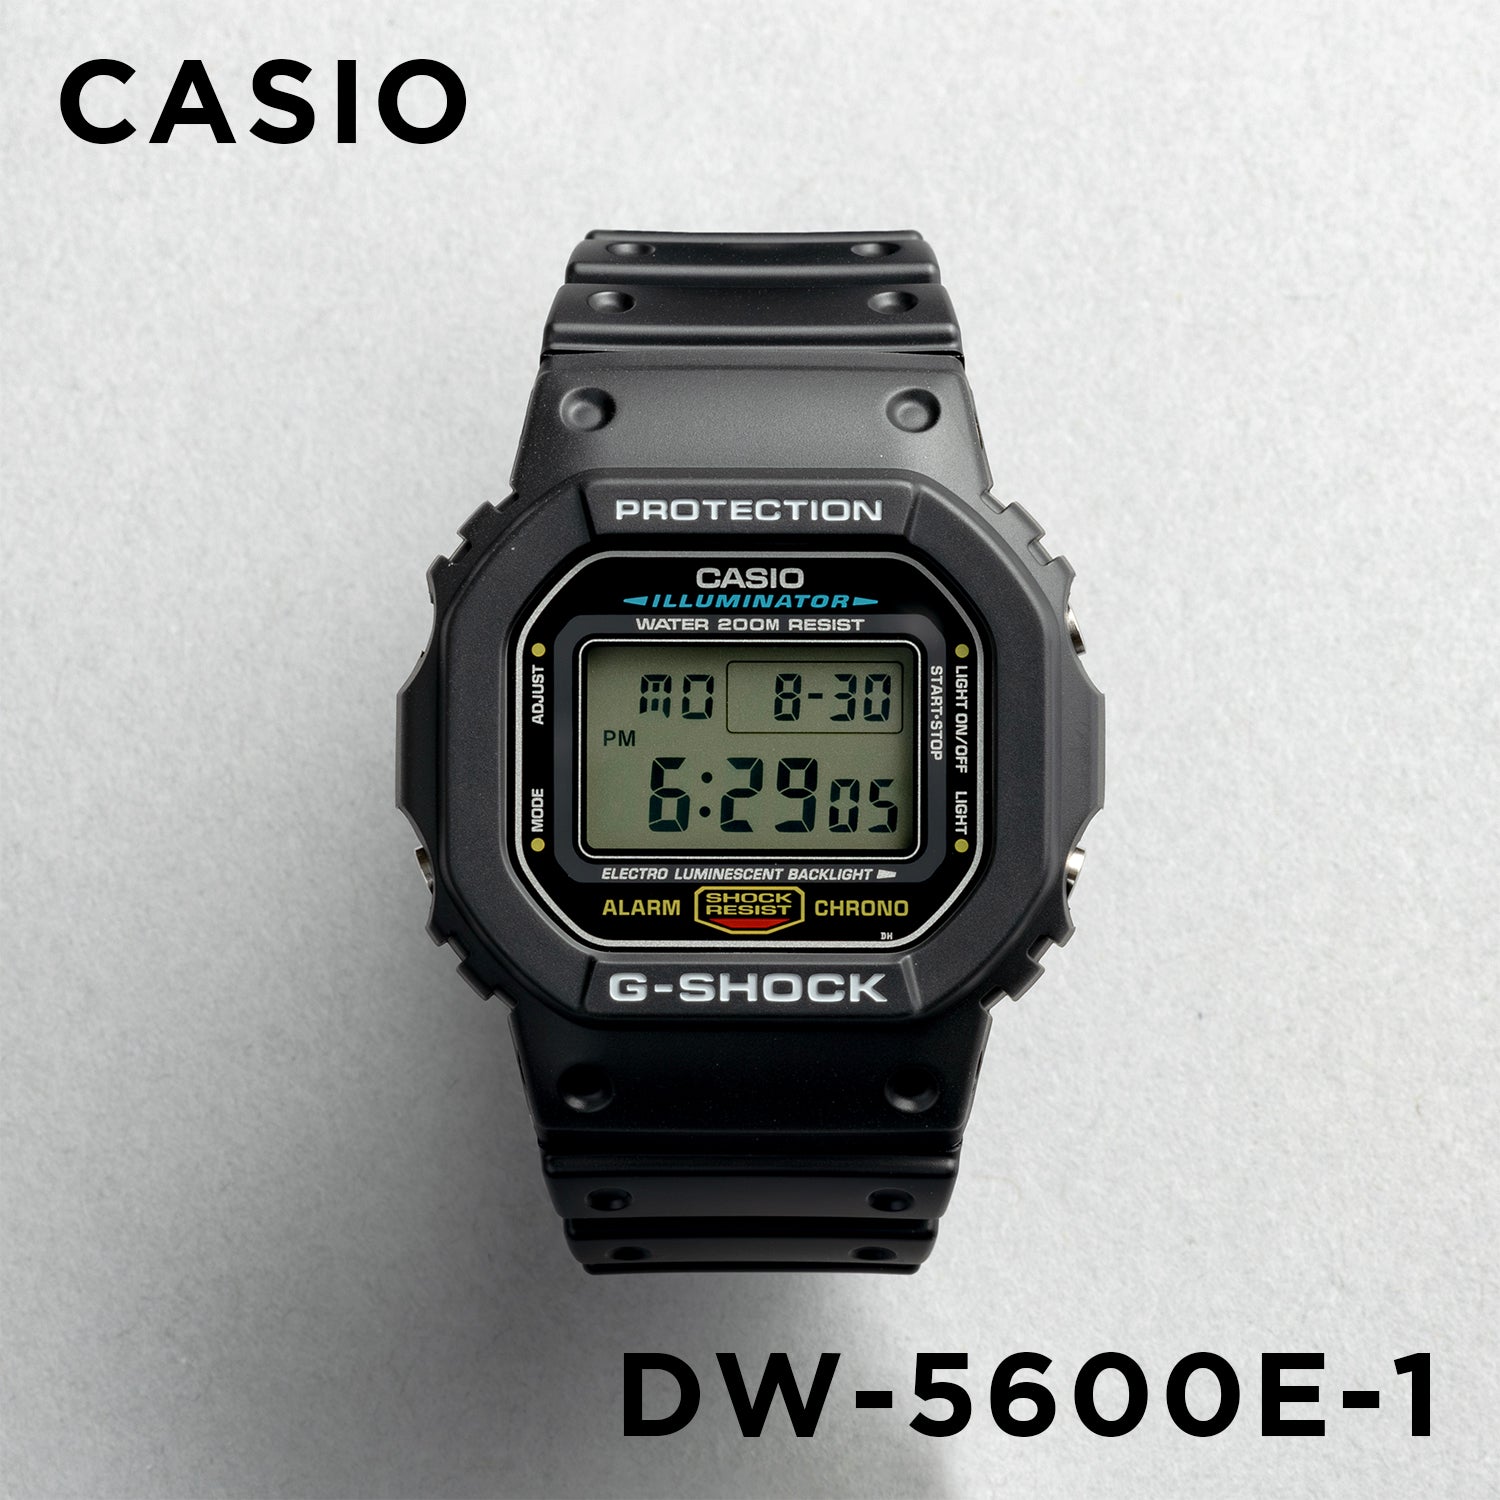 Casio G-shock DW-5600E-1